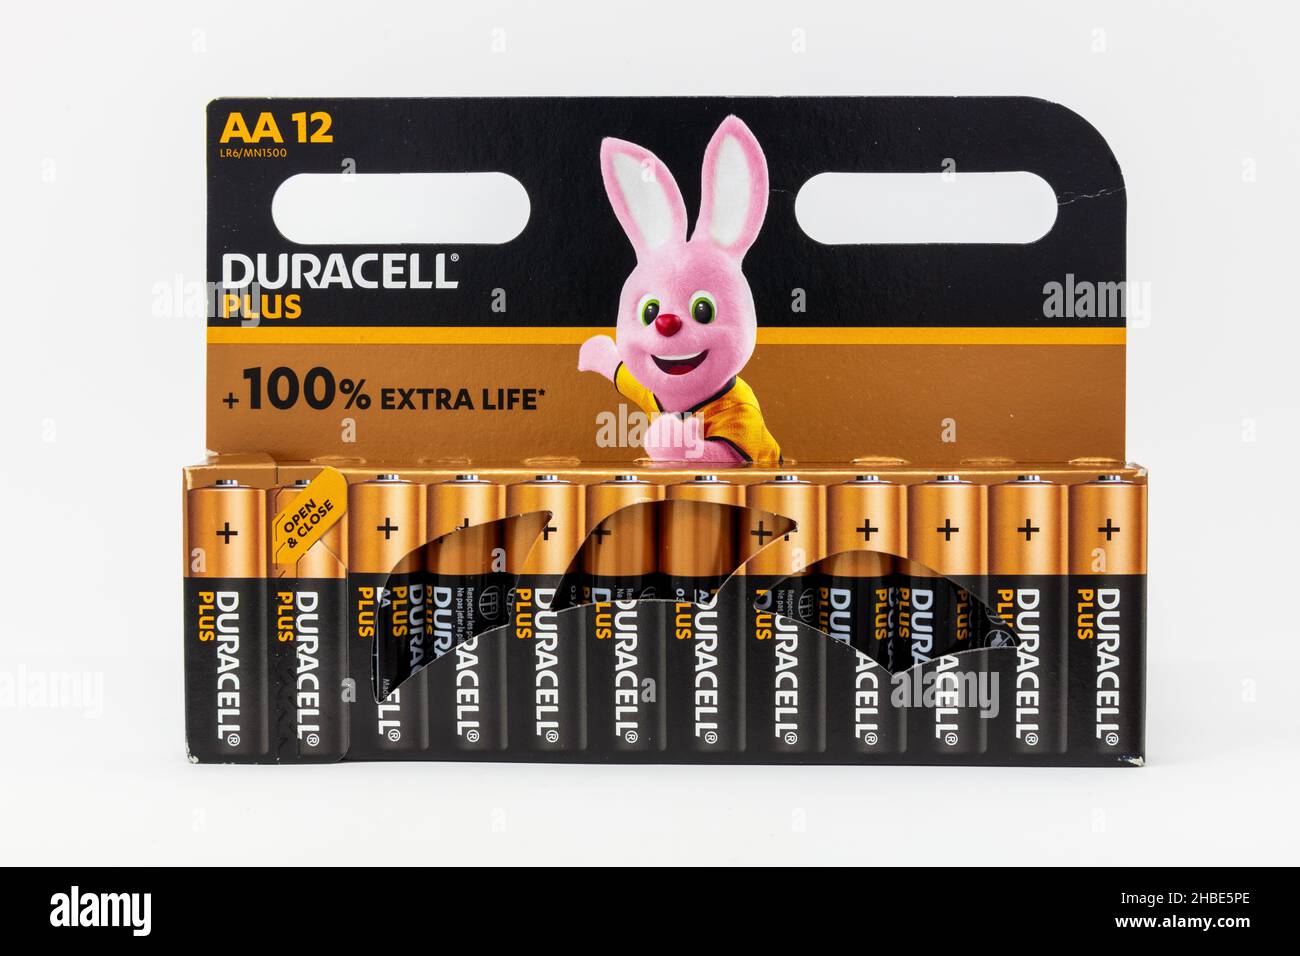 Duracell Plus AA Alkaline Batteries Stock Photo